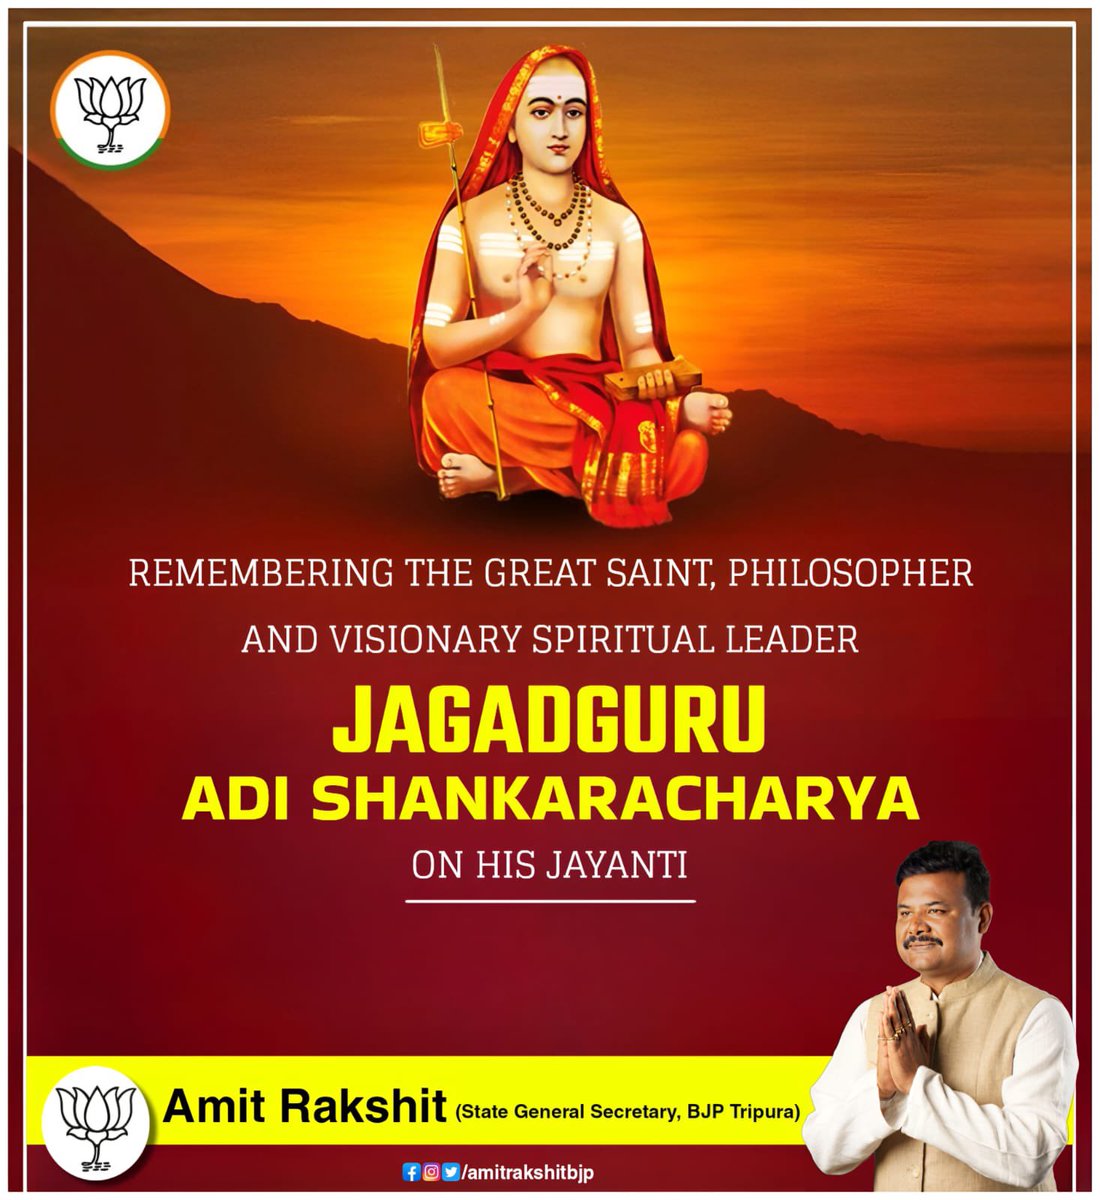 Remembering the great saint, philosopher and spiritual leader 'Jagadguru' Adi Shankaracharya ji on his Jayanti.
#ShankarAcharyaJayanti #AdiShankaracharyaJayanti